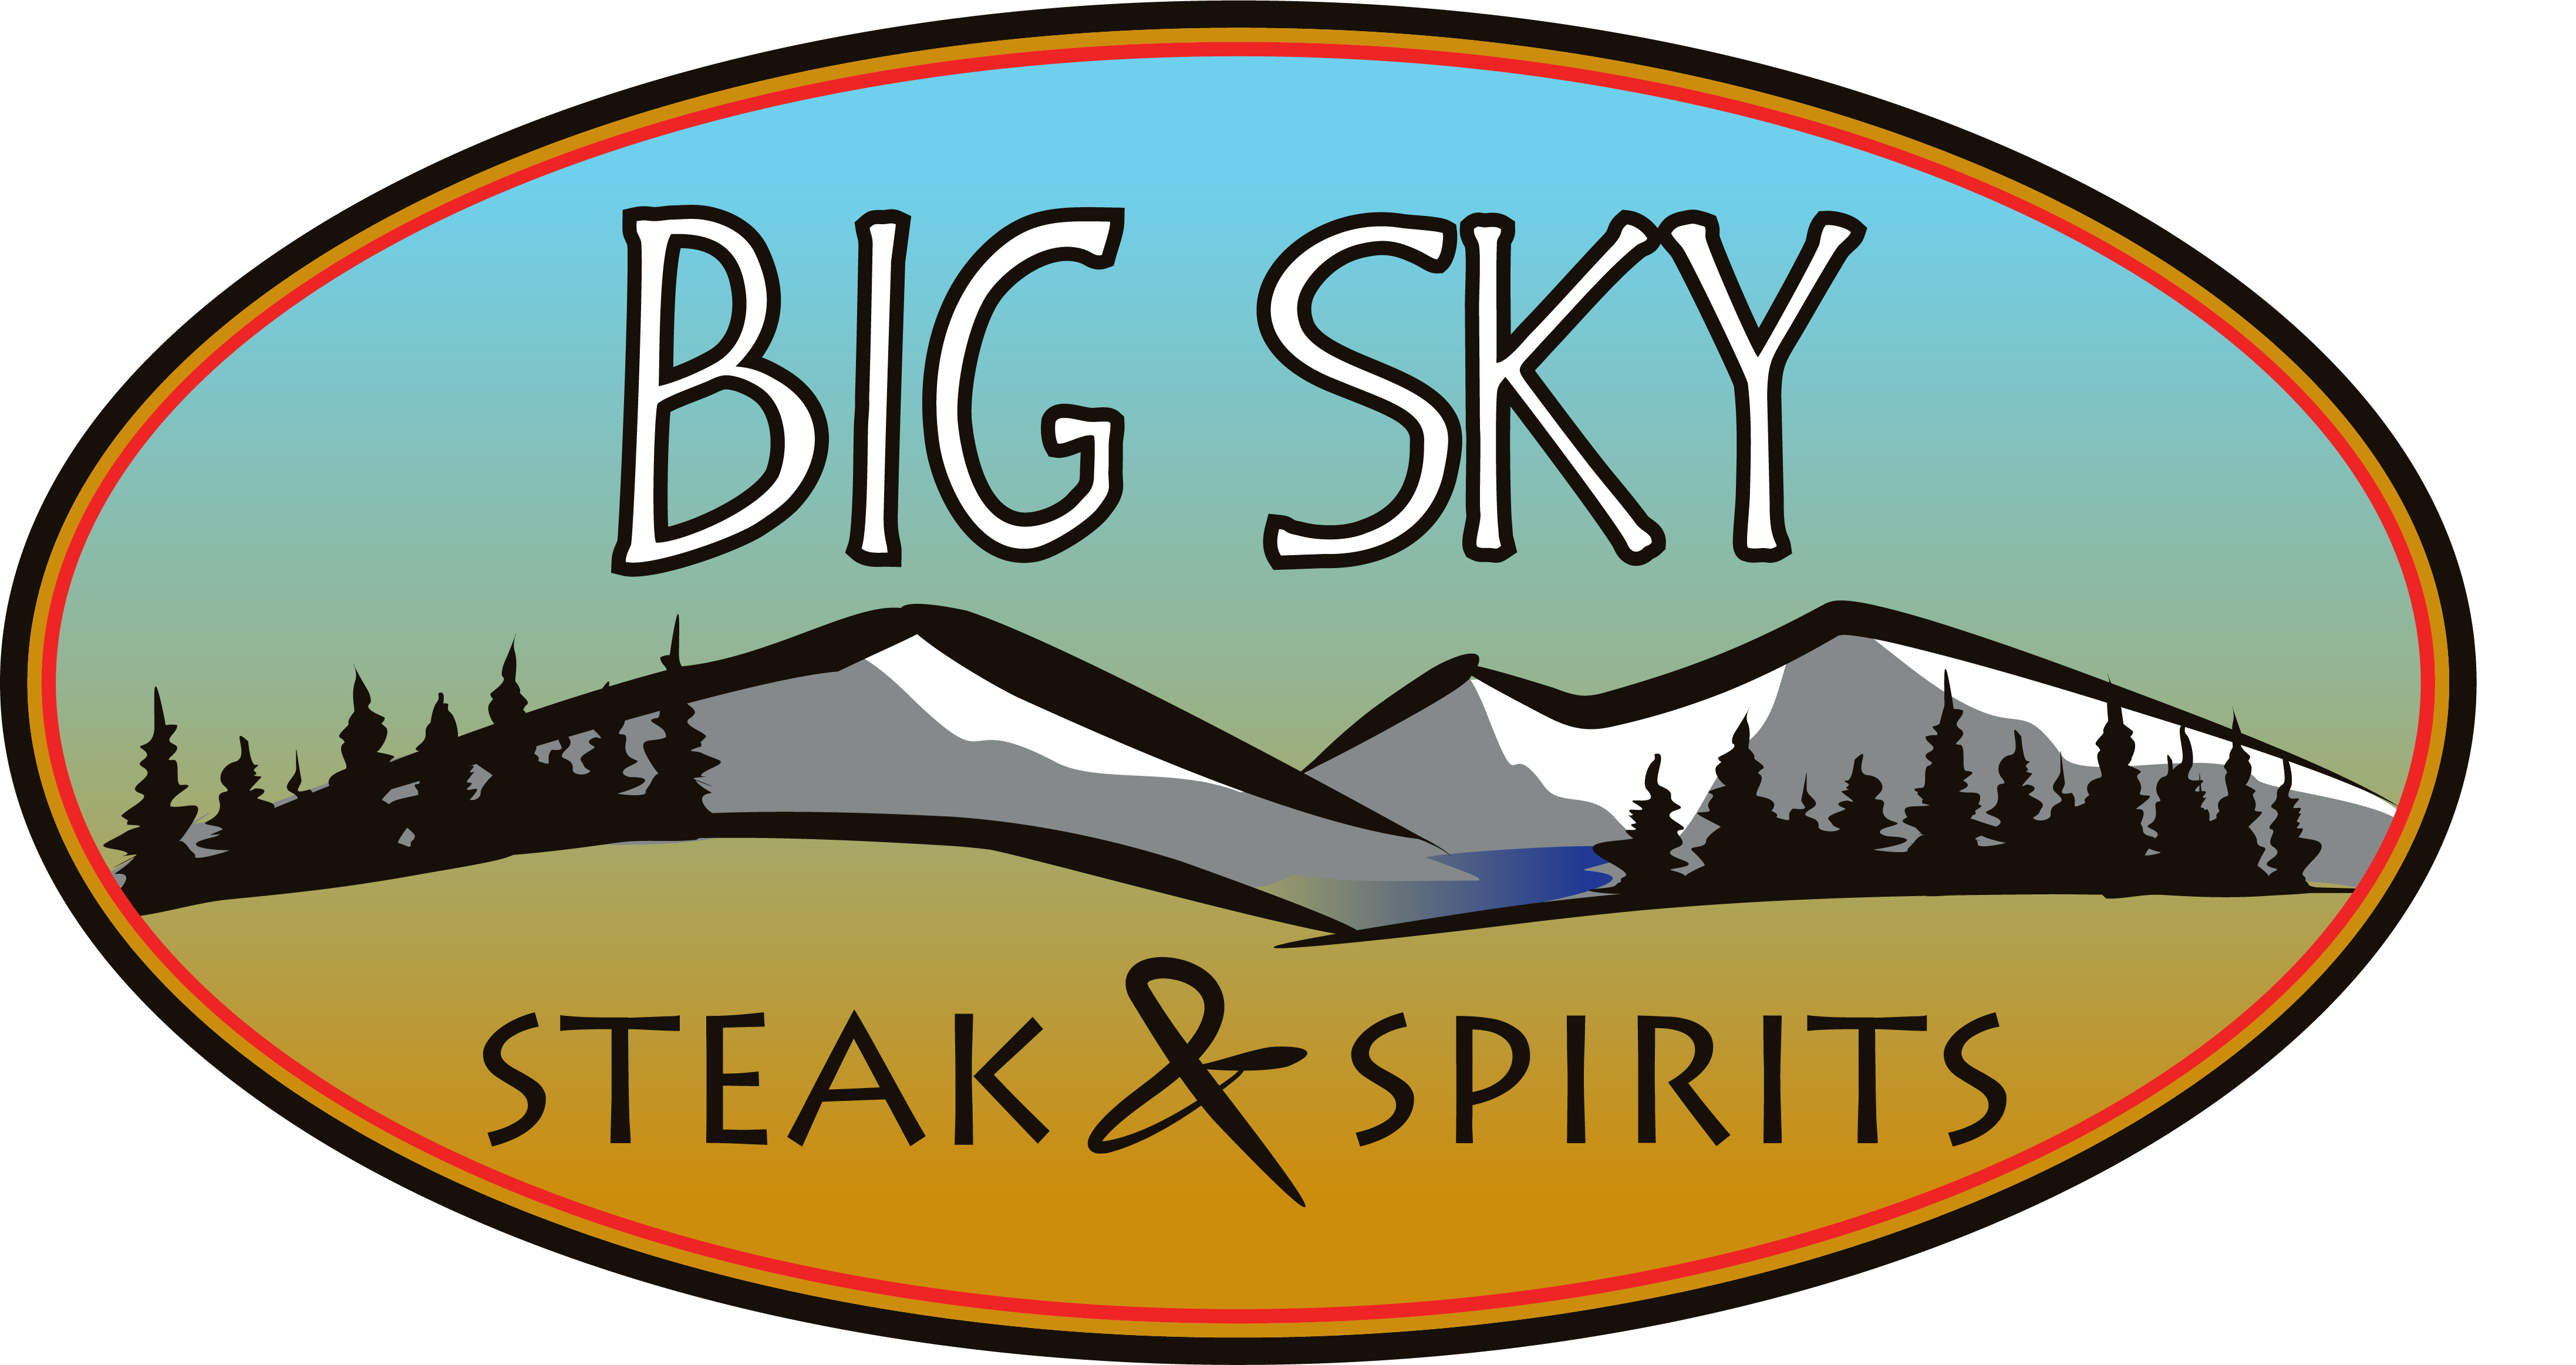 Big Sky: Steak & Spirits Home